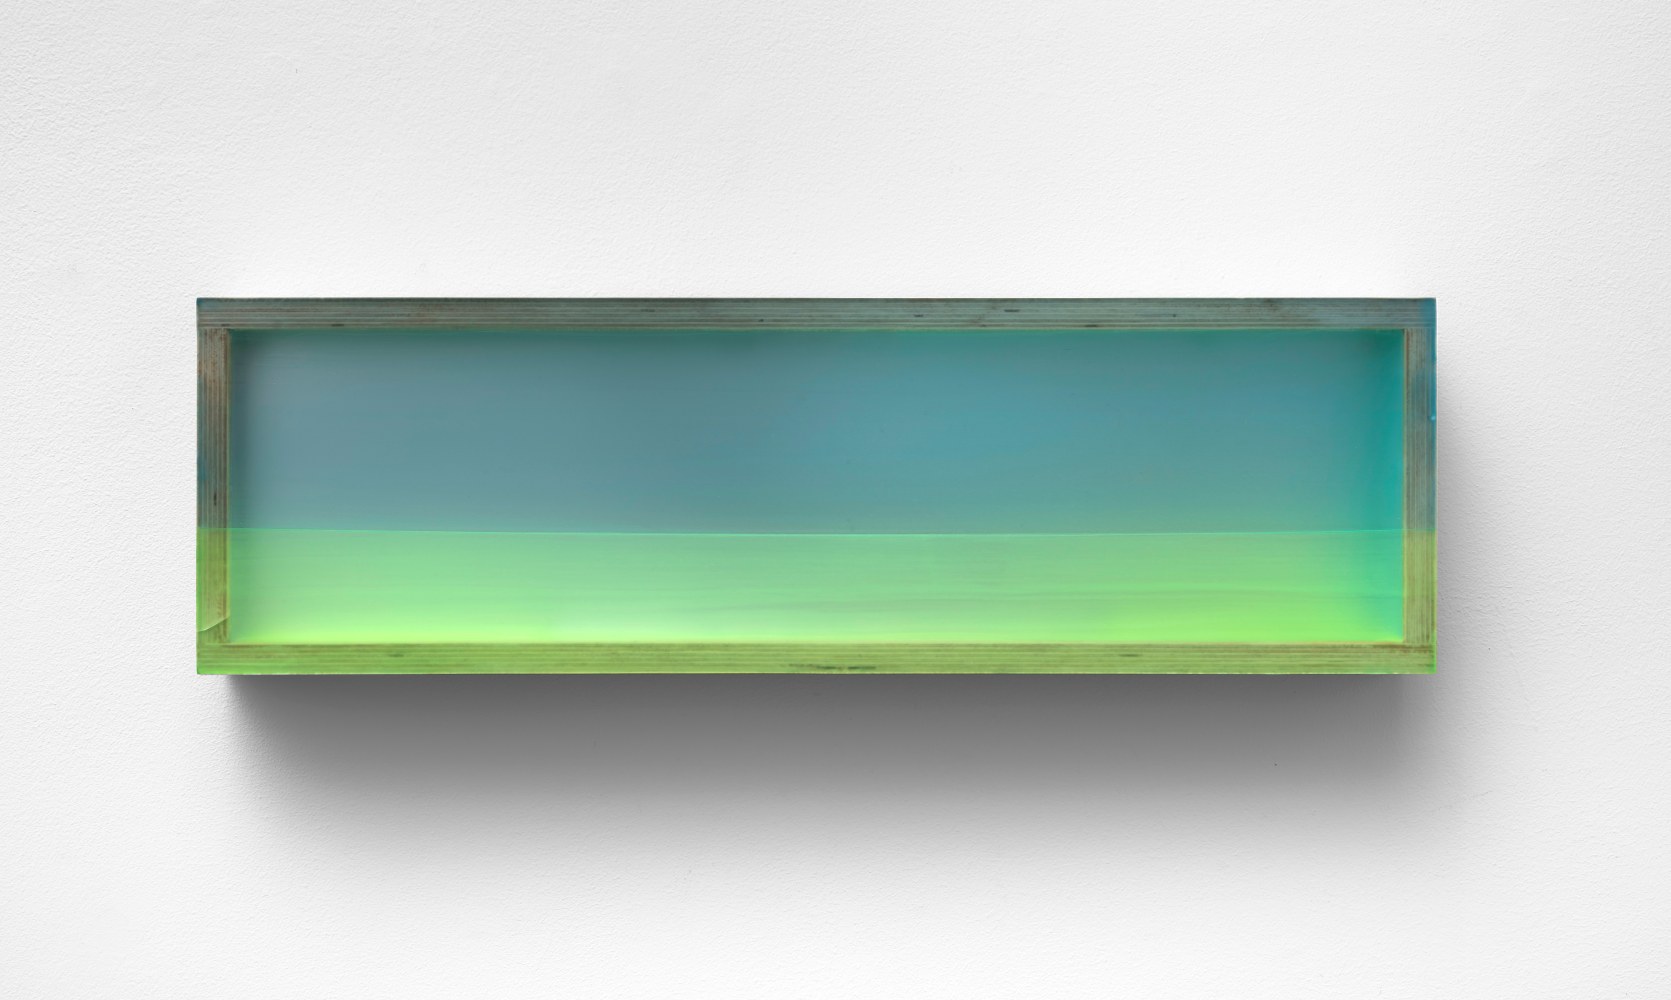 Greenwash, 2019, mixed media, reclaimed Plexiglas, birch plywood box, 8 3/8 x 27 3/4 x 3 3/4 inches; 21.3 x 70.5 x 9.5 centimeters, LSFA# 14798